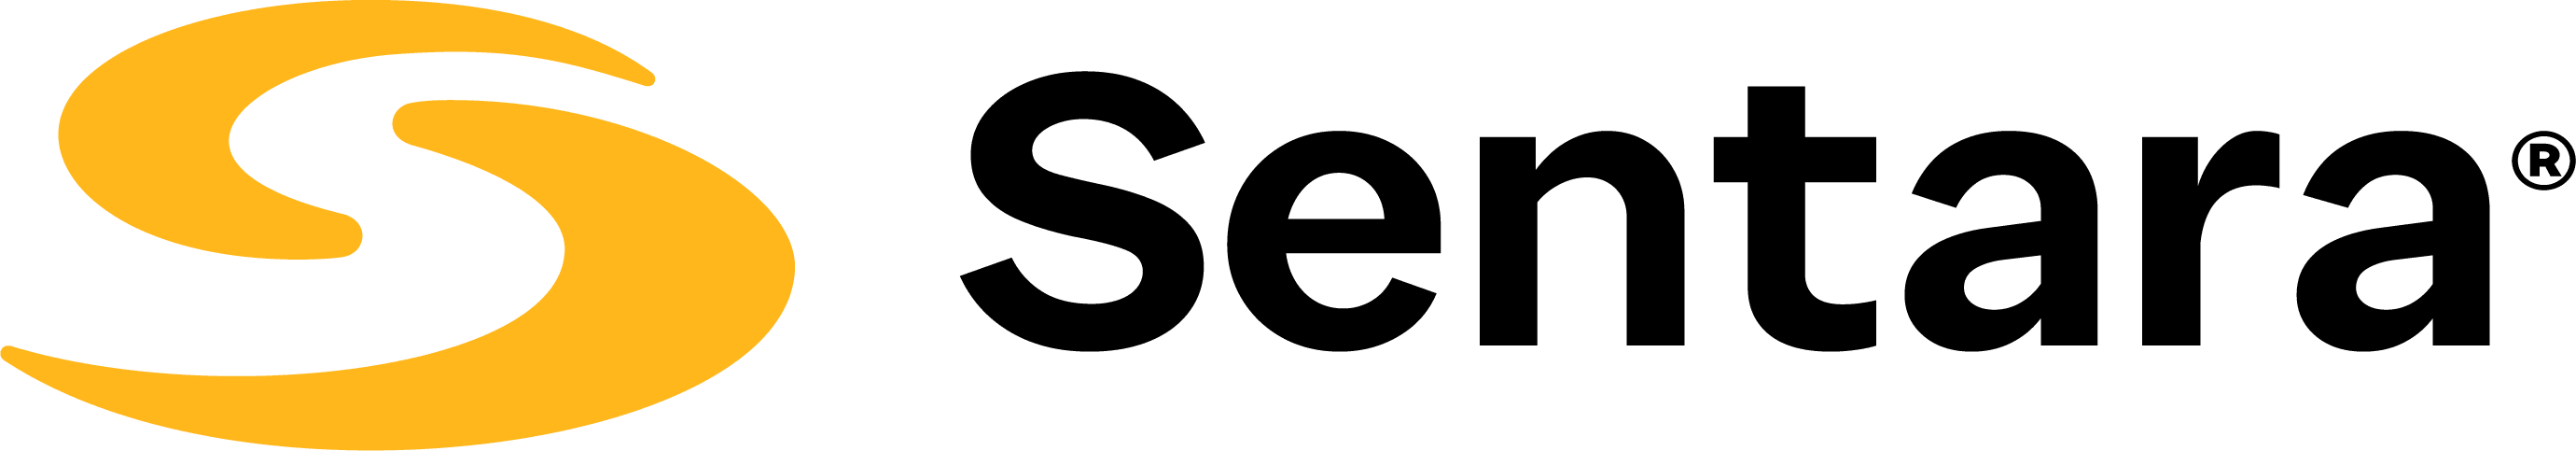 Sentara Health logo - Annual Summit